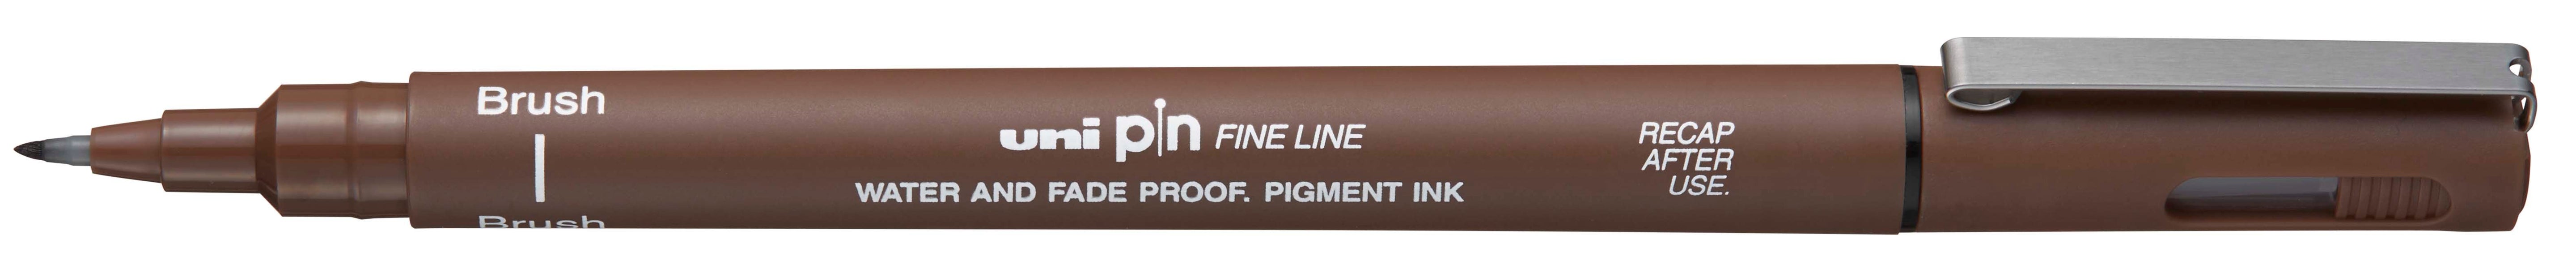 Uni Pin Fine Line Sepia Waterproof Drawing Pen. The Uni Pin pen range uses fade proof, waterproof pigment ink.